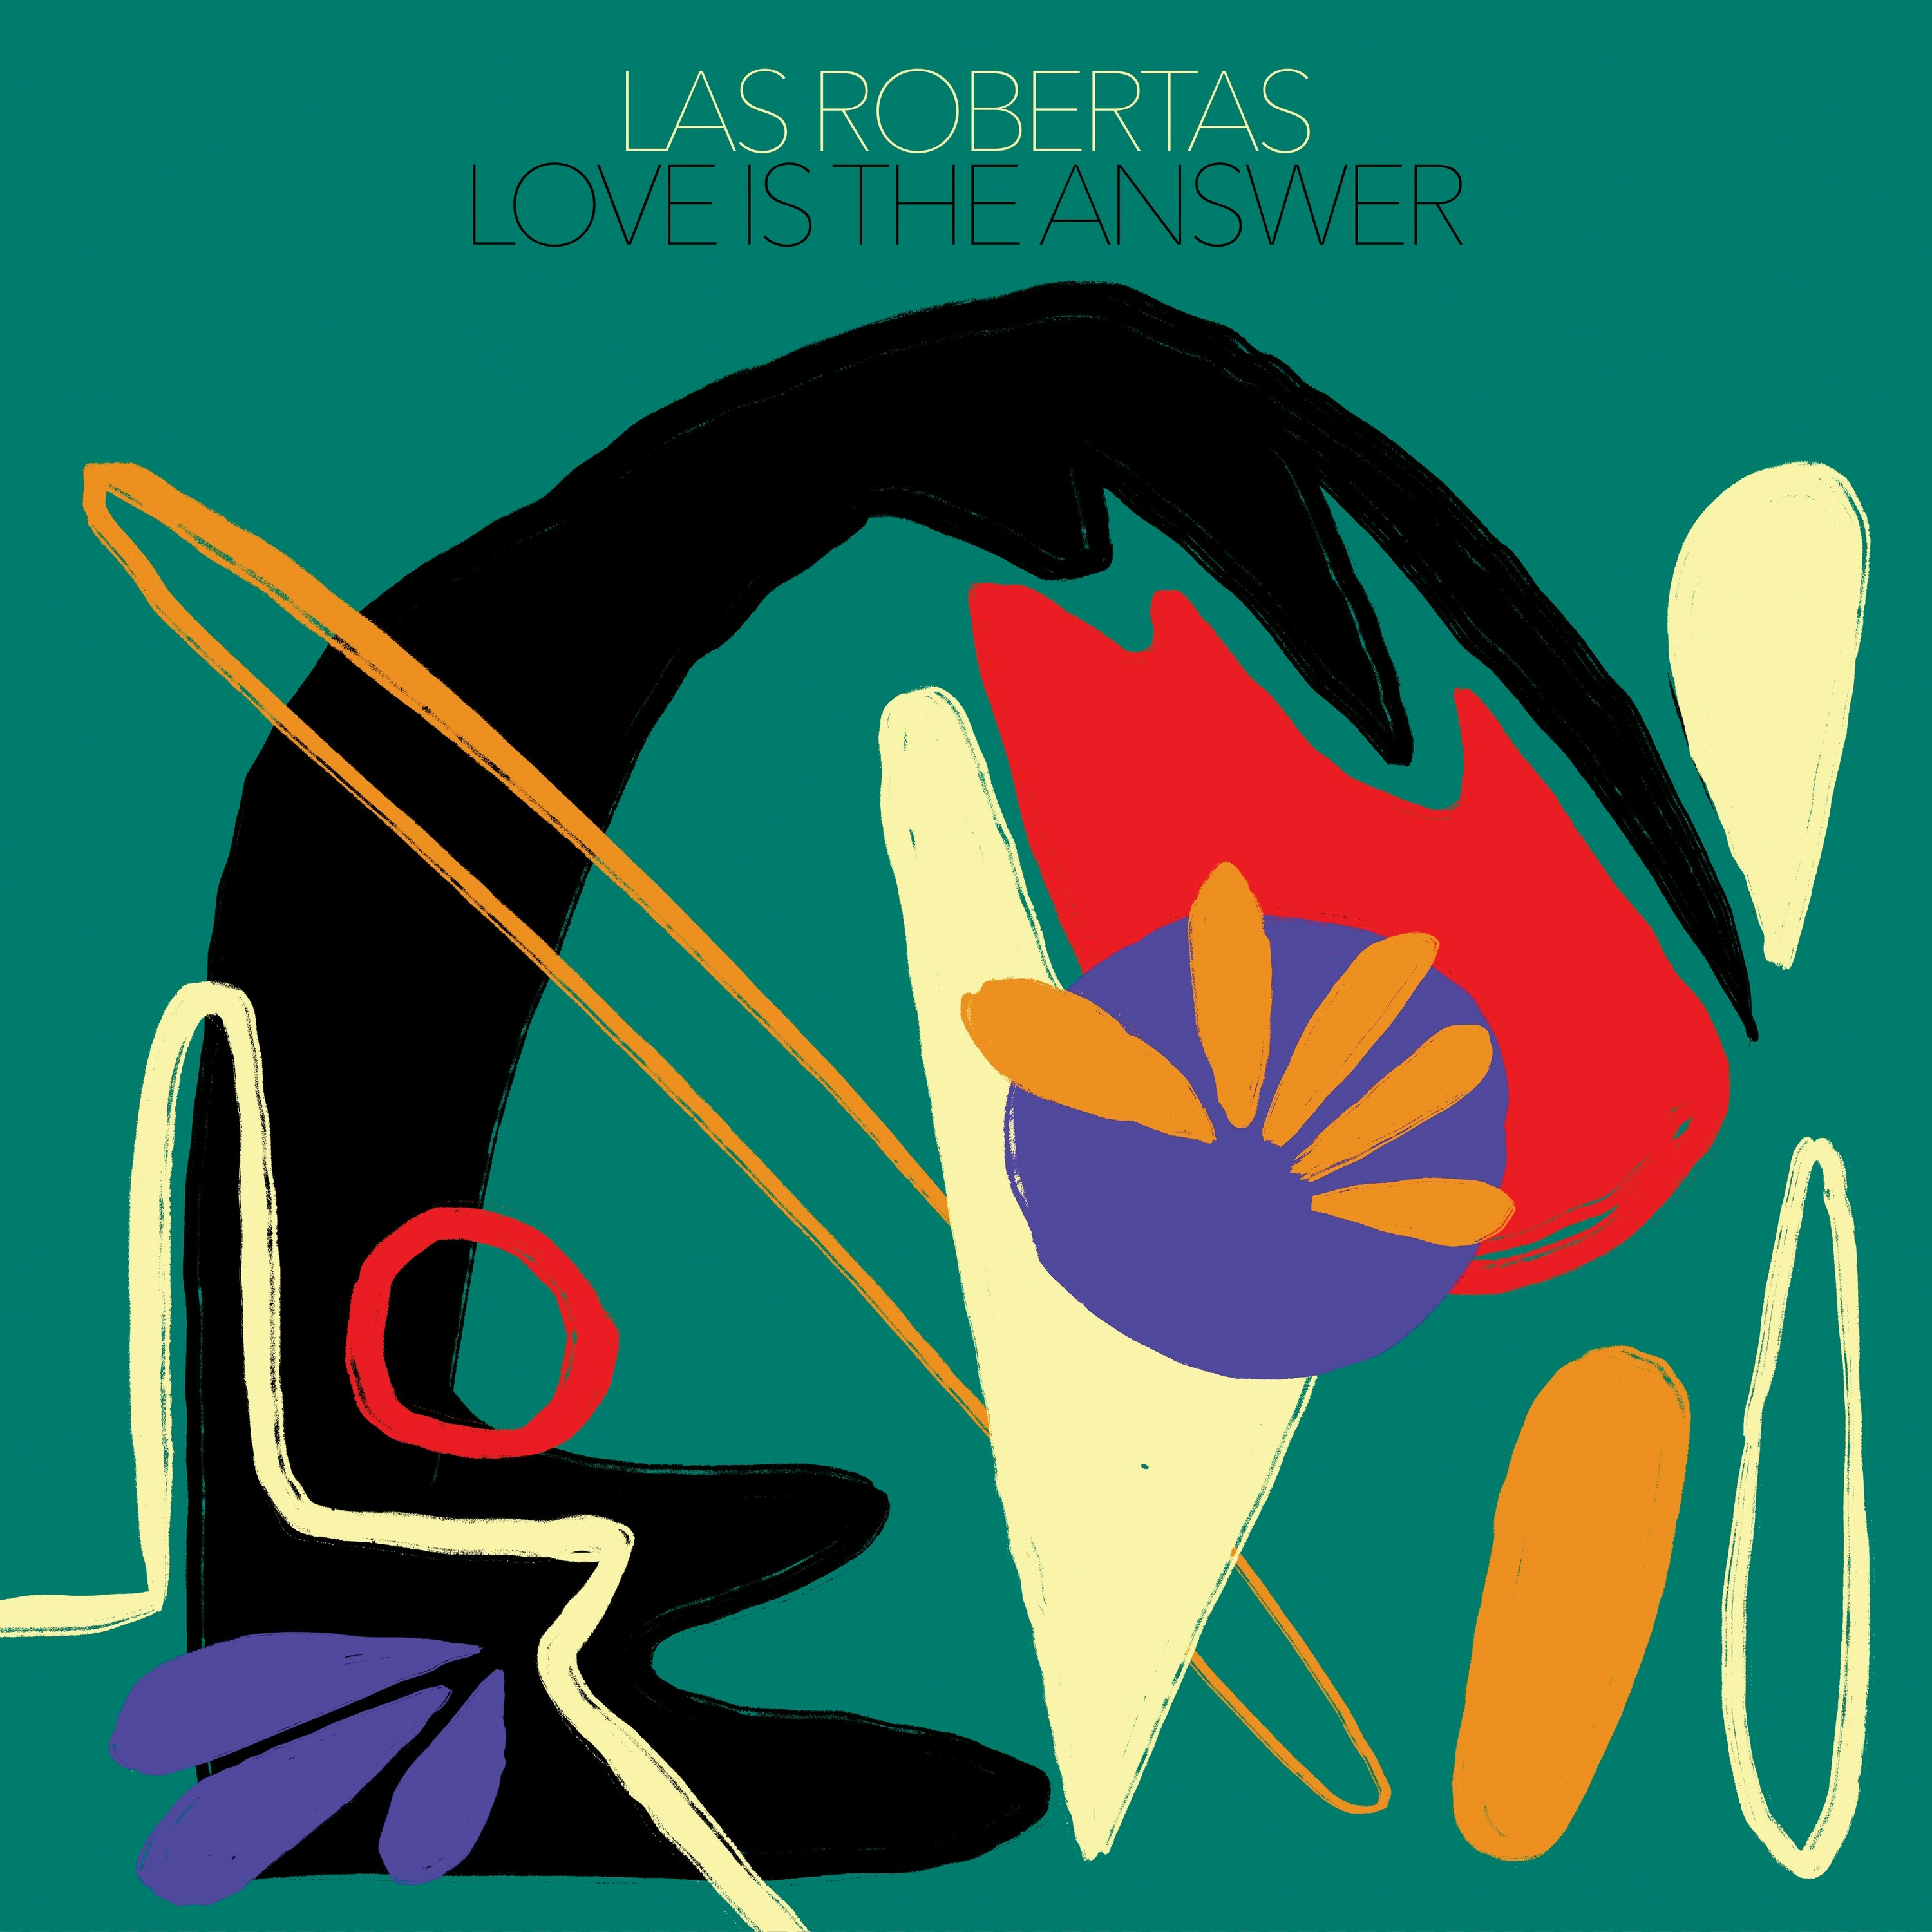 Album artwork for Album artwork for Love is the Answer by Las Robertas  by Love is the Answer - Las Robertas 